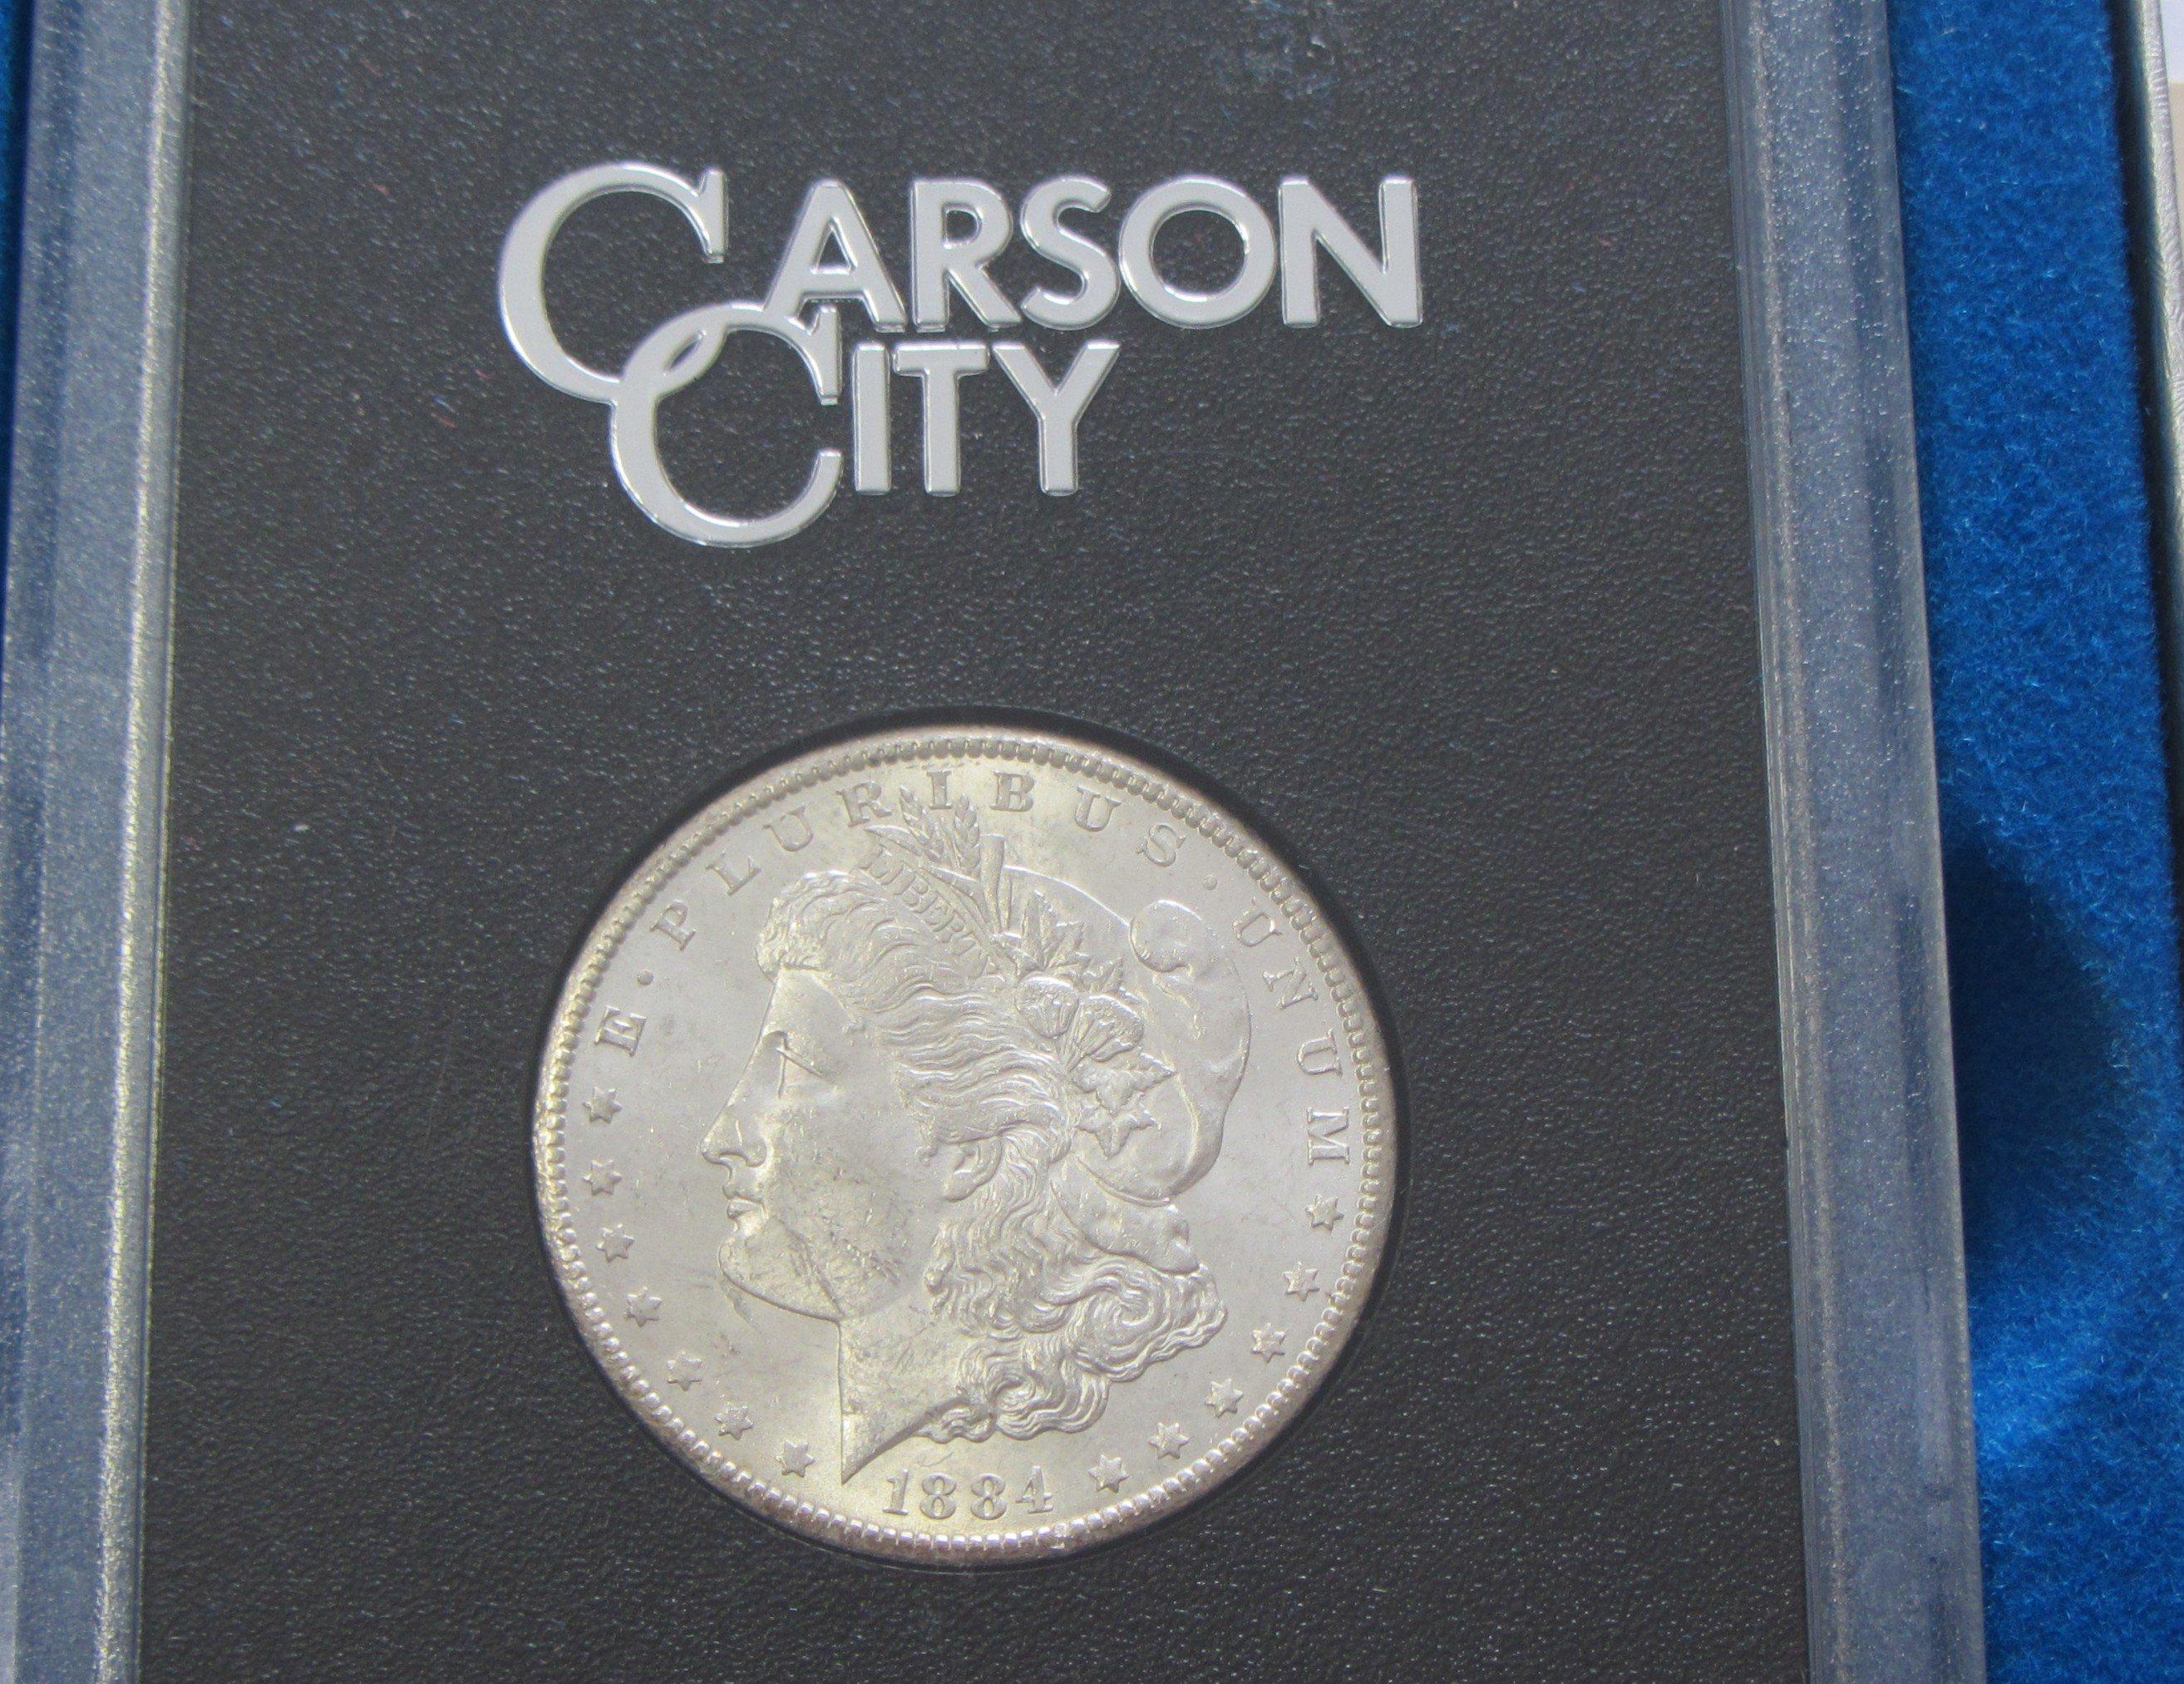 $1 1884-CC CARSON CITY MORGAN GSA HOARD WITH BOX AND PAPER